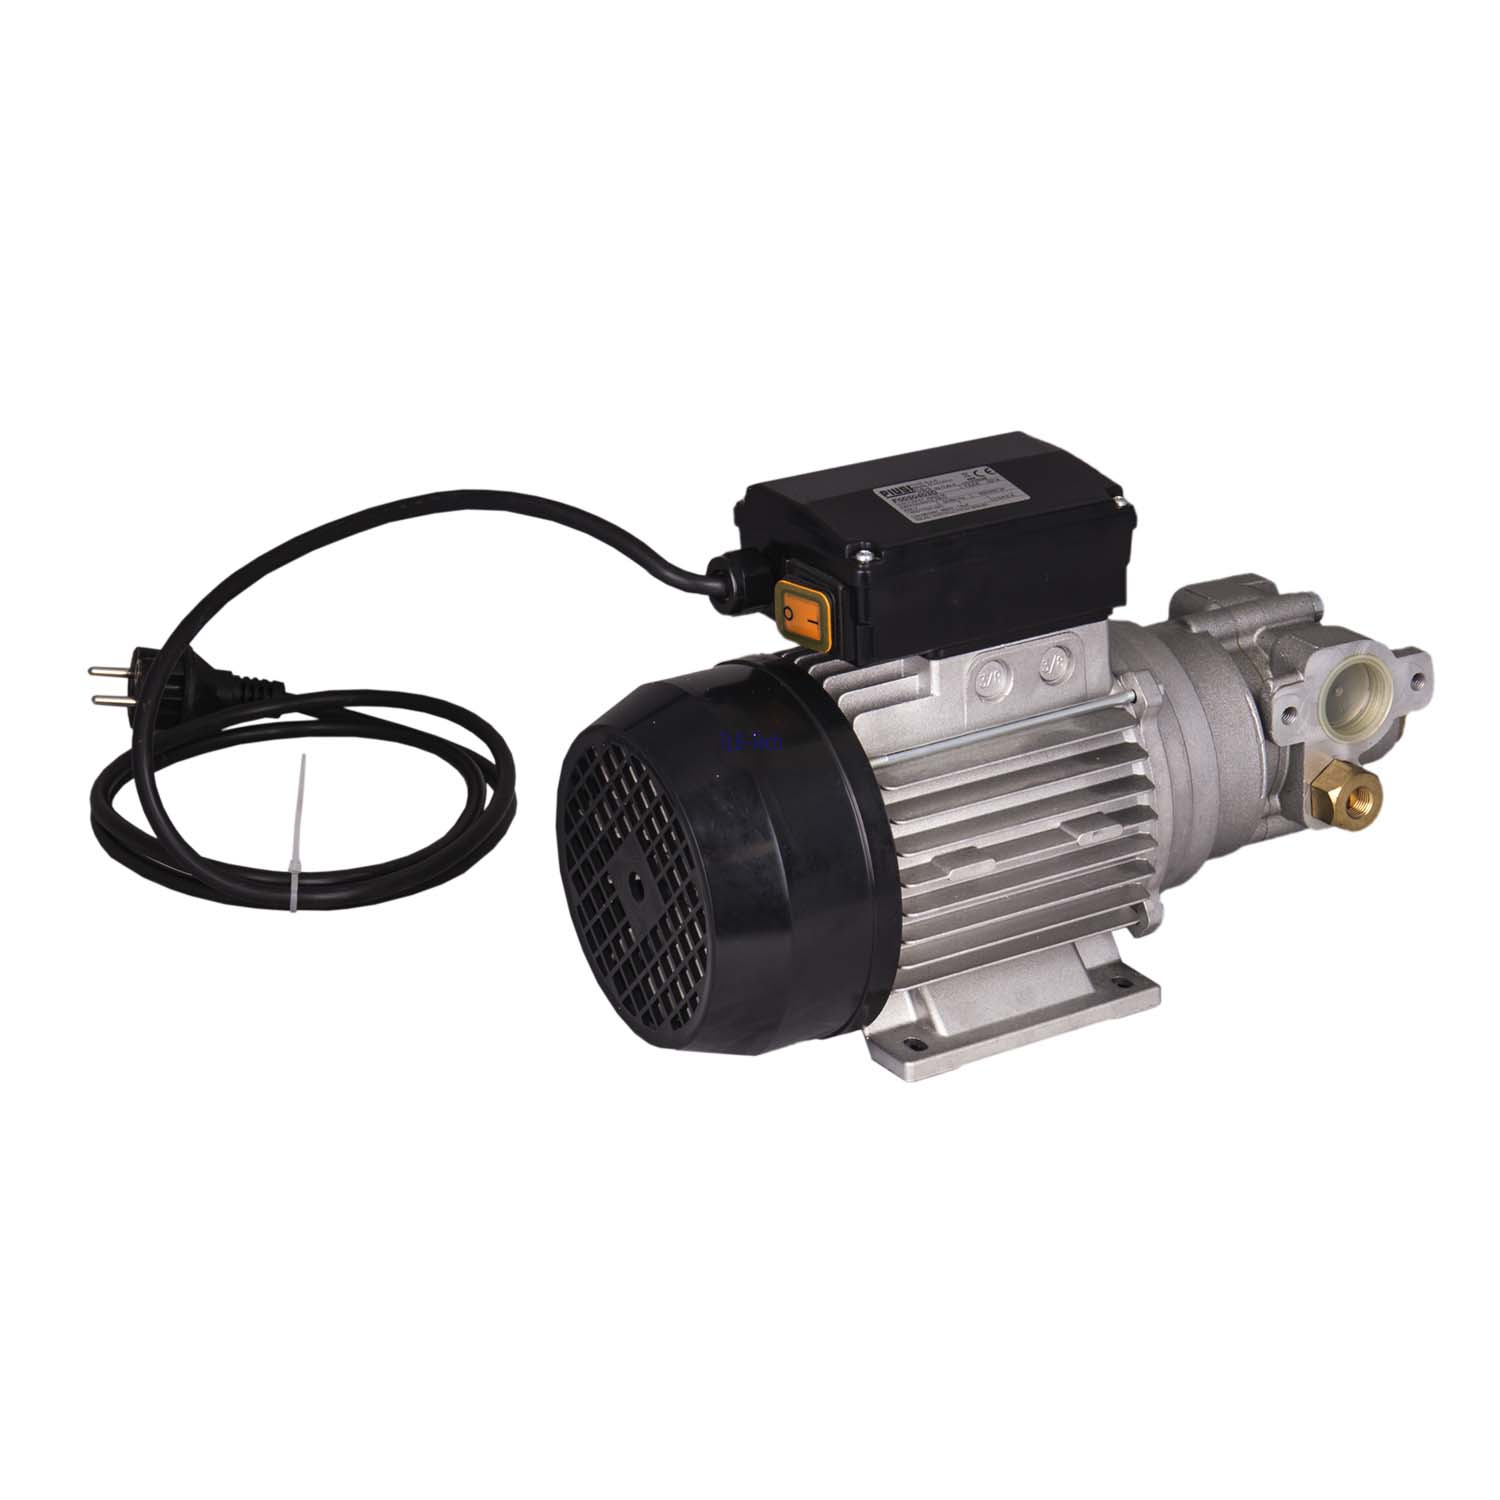 Piusi Depuroil 60 fahrbare 230V-50l/min. Ölpumpe Filtergerät für Hydrauliköl